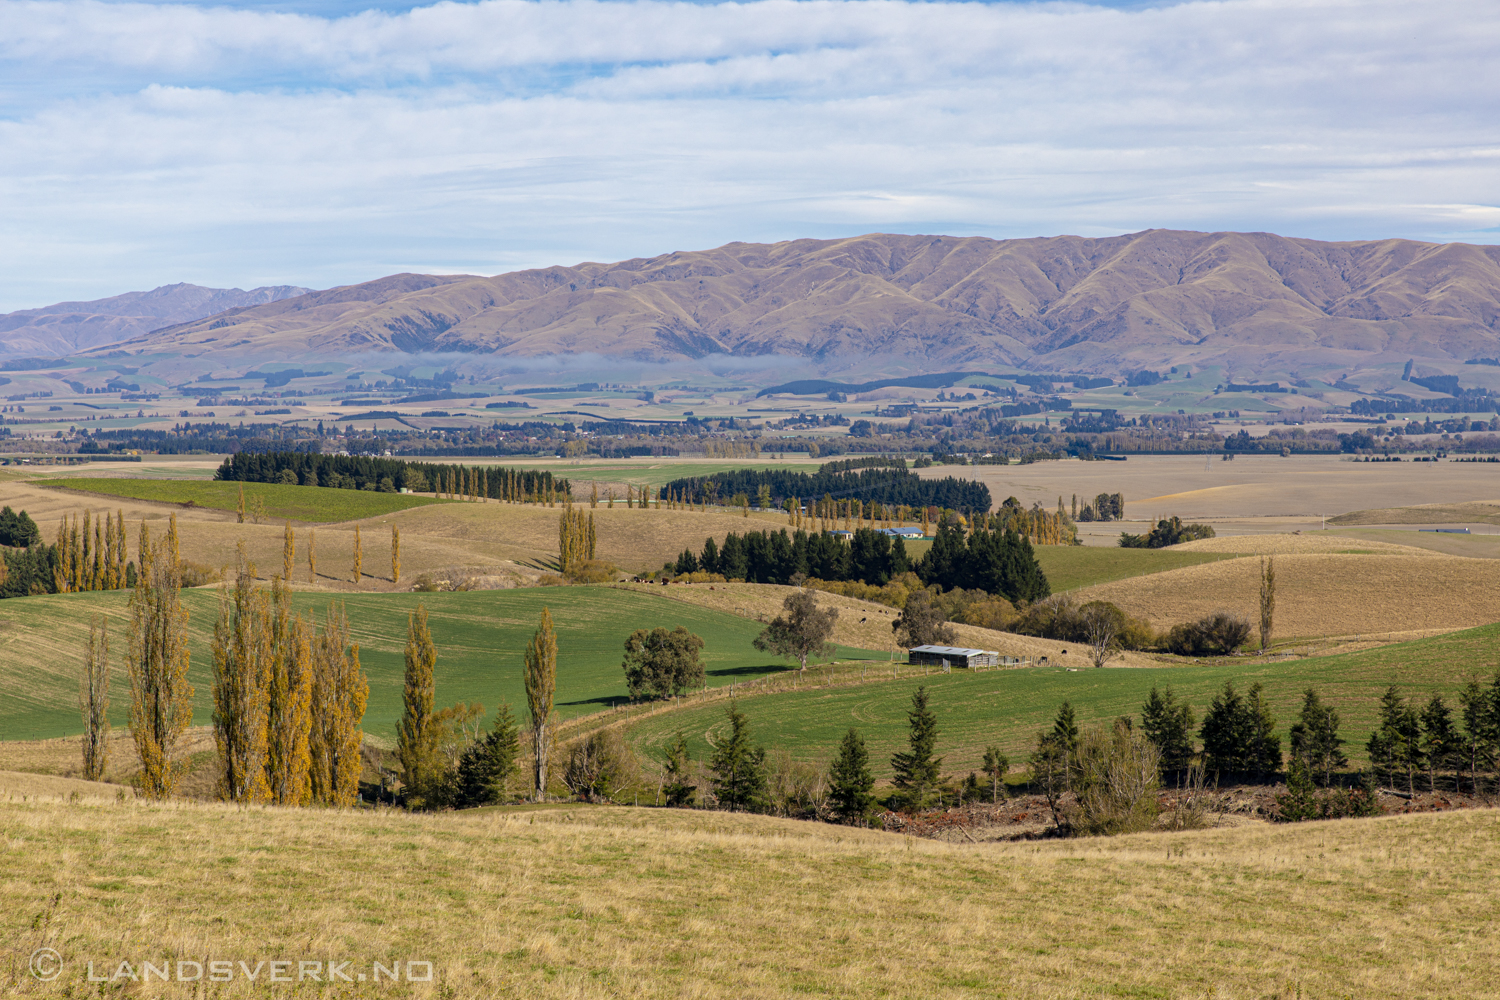 On the way to Lake Tekapo, New Zealand. 

(Canon EOS 5D Mark IV / Canon EF 24-70mm f/2.8 L II USM)